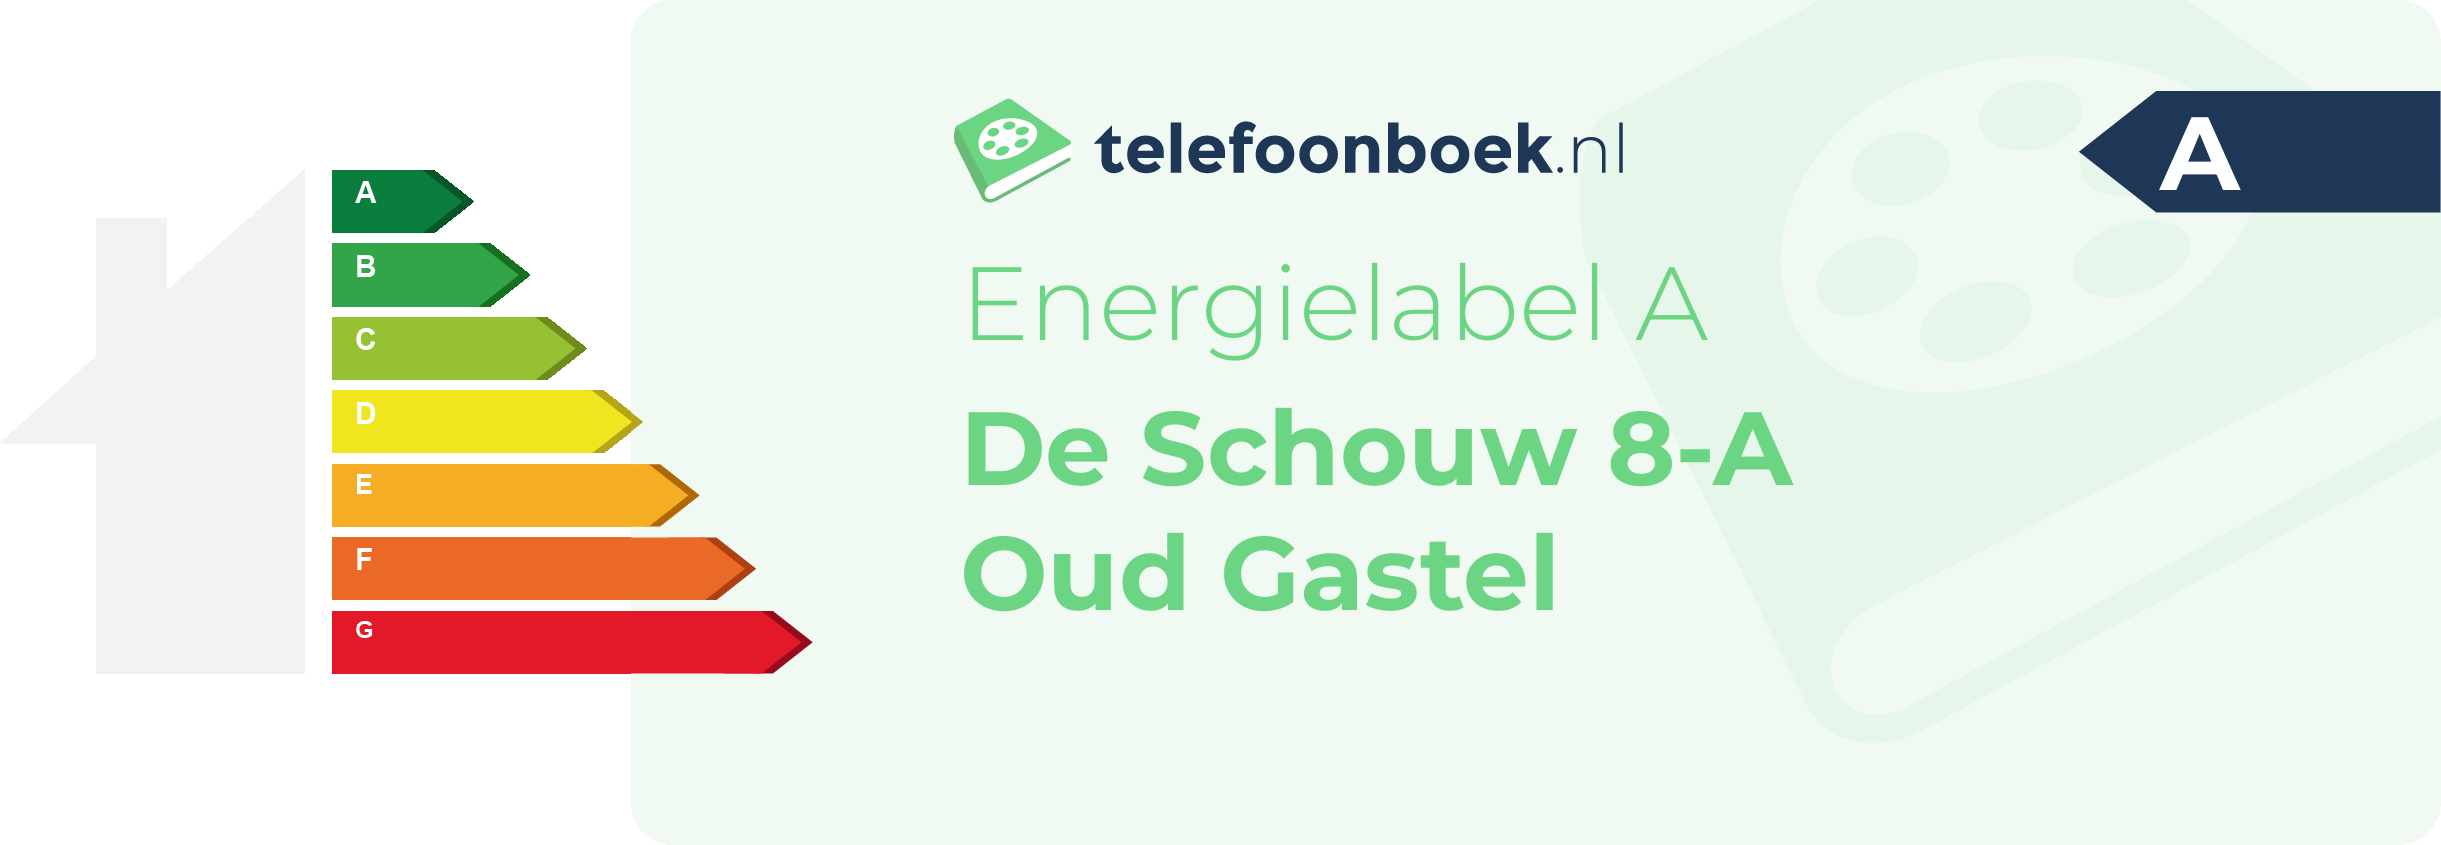 Energielabel De Schouw 8-A Oud Gastel